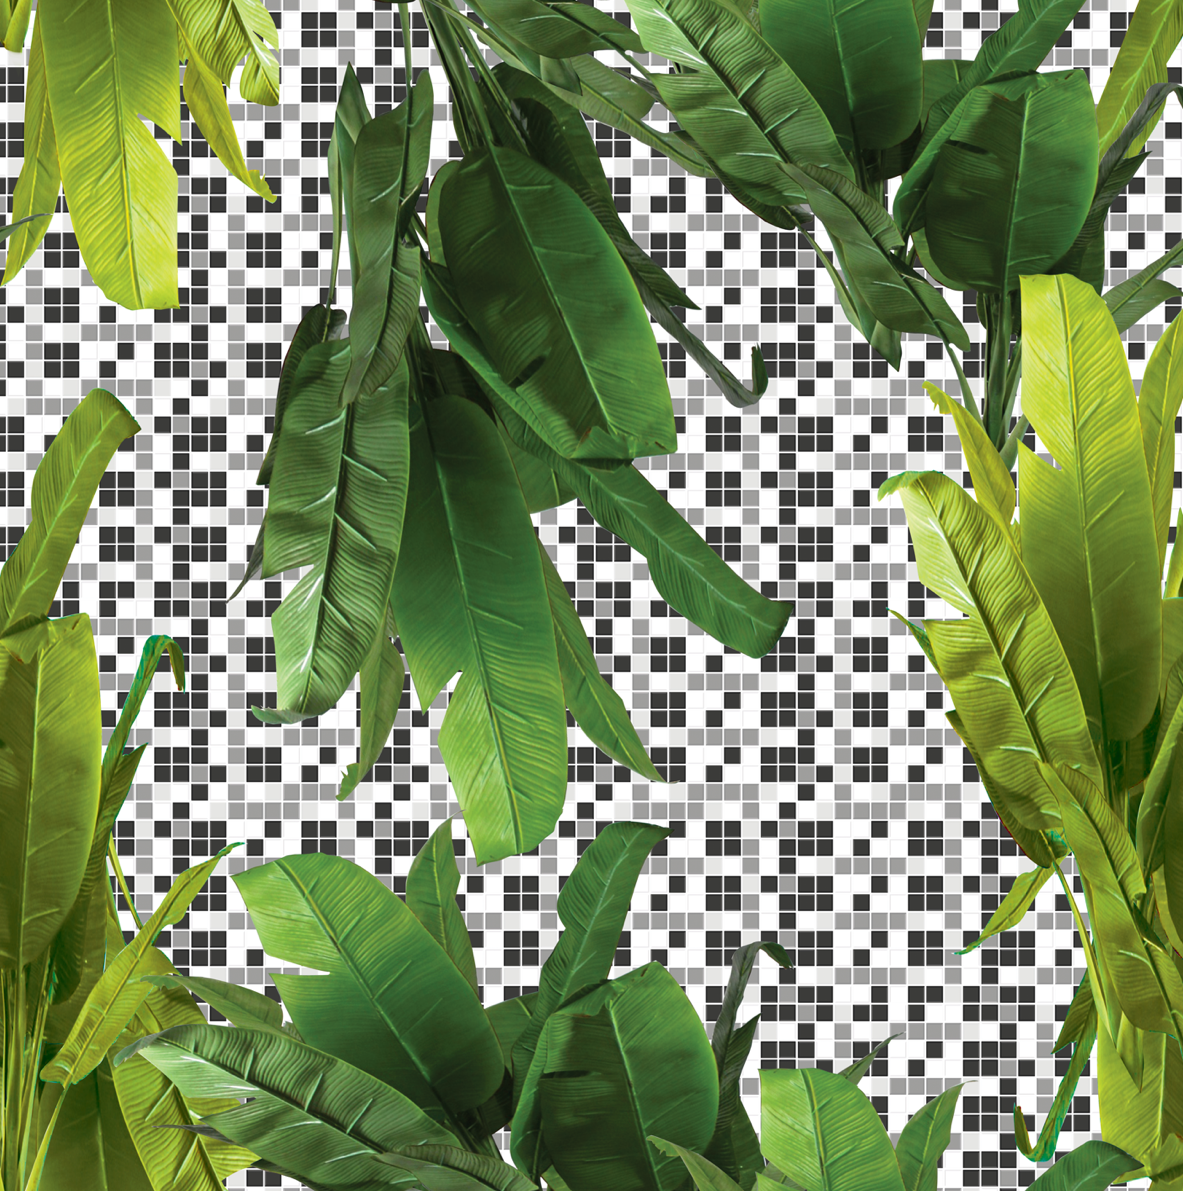 textile print design moda lindademorrer banana tropicalprint Tropical photoshop fabric pattern graphic Estampa estampaexclusiva dalutex